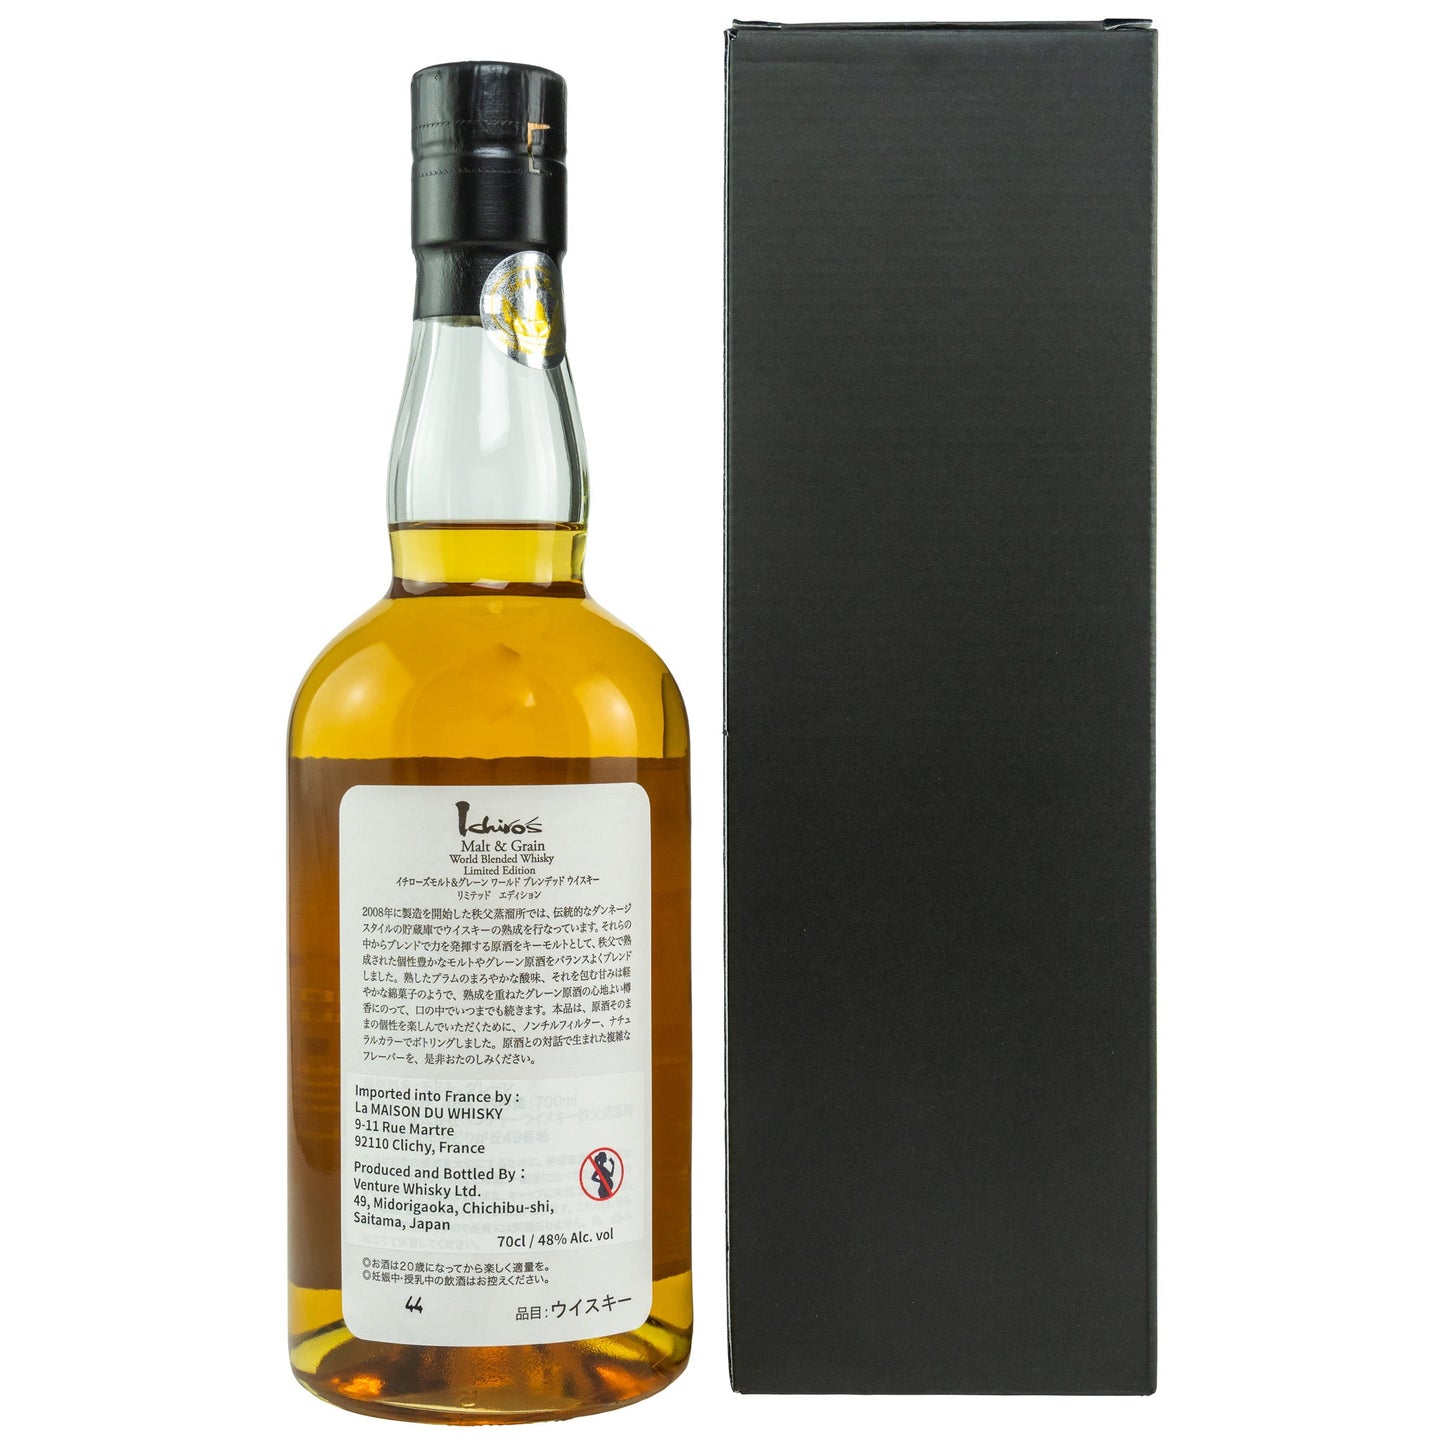 Chichibu | Ichiros Malt & Grain | World Blended Whisky | 2020 Limited Edition | 48%GET A BOTTLE